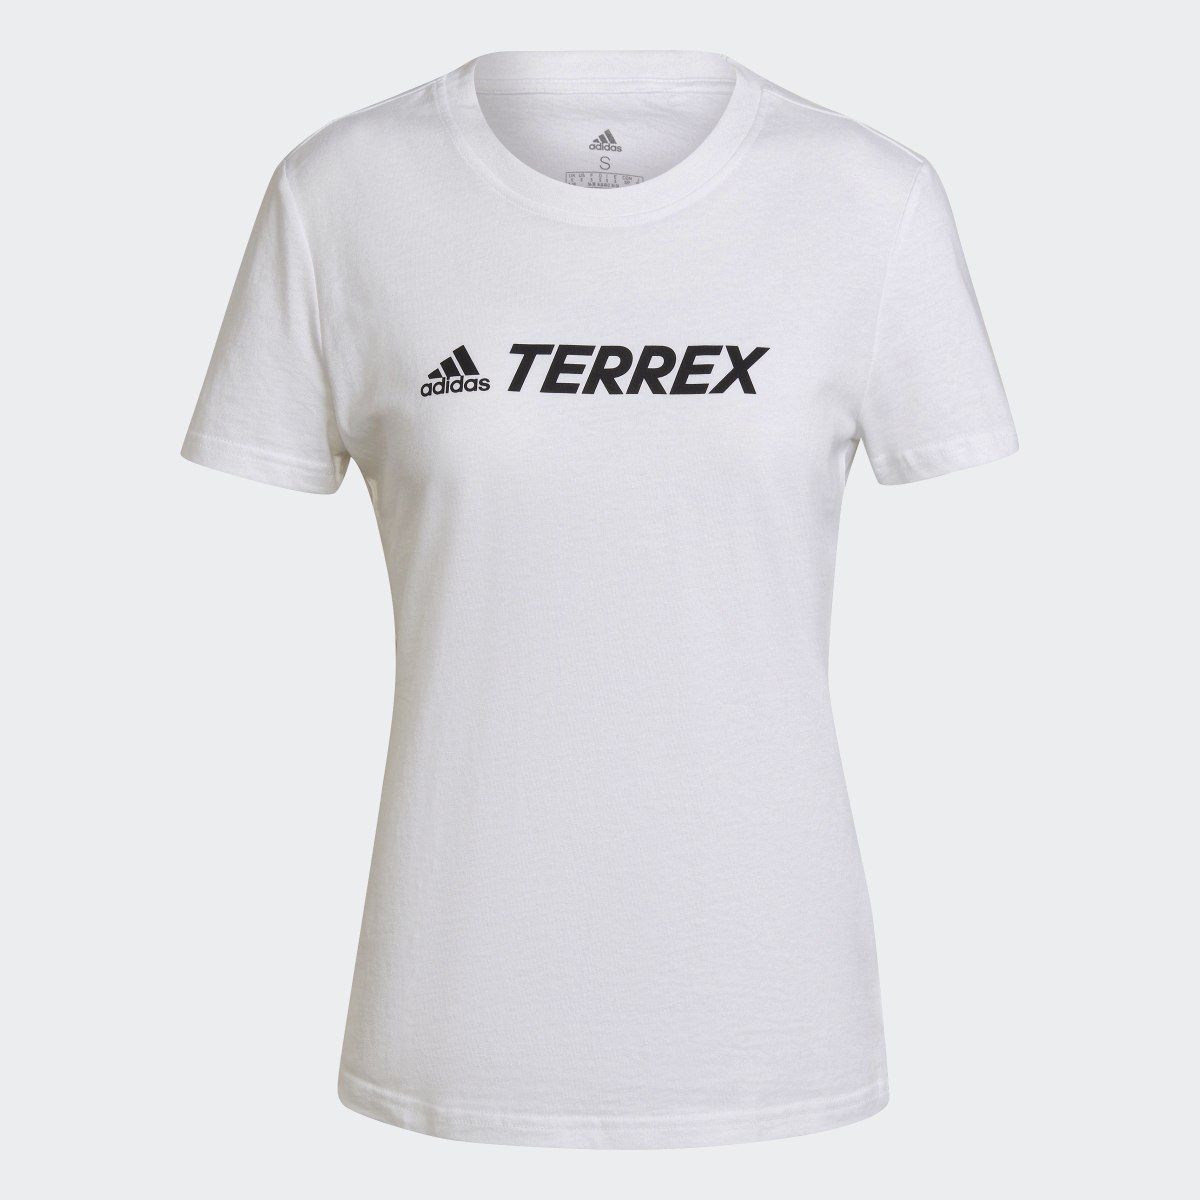 Adidas TERREX Classic Logo T-Shirt. 5